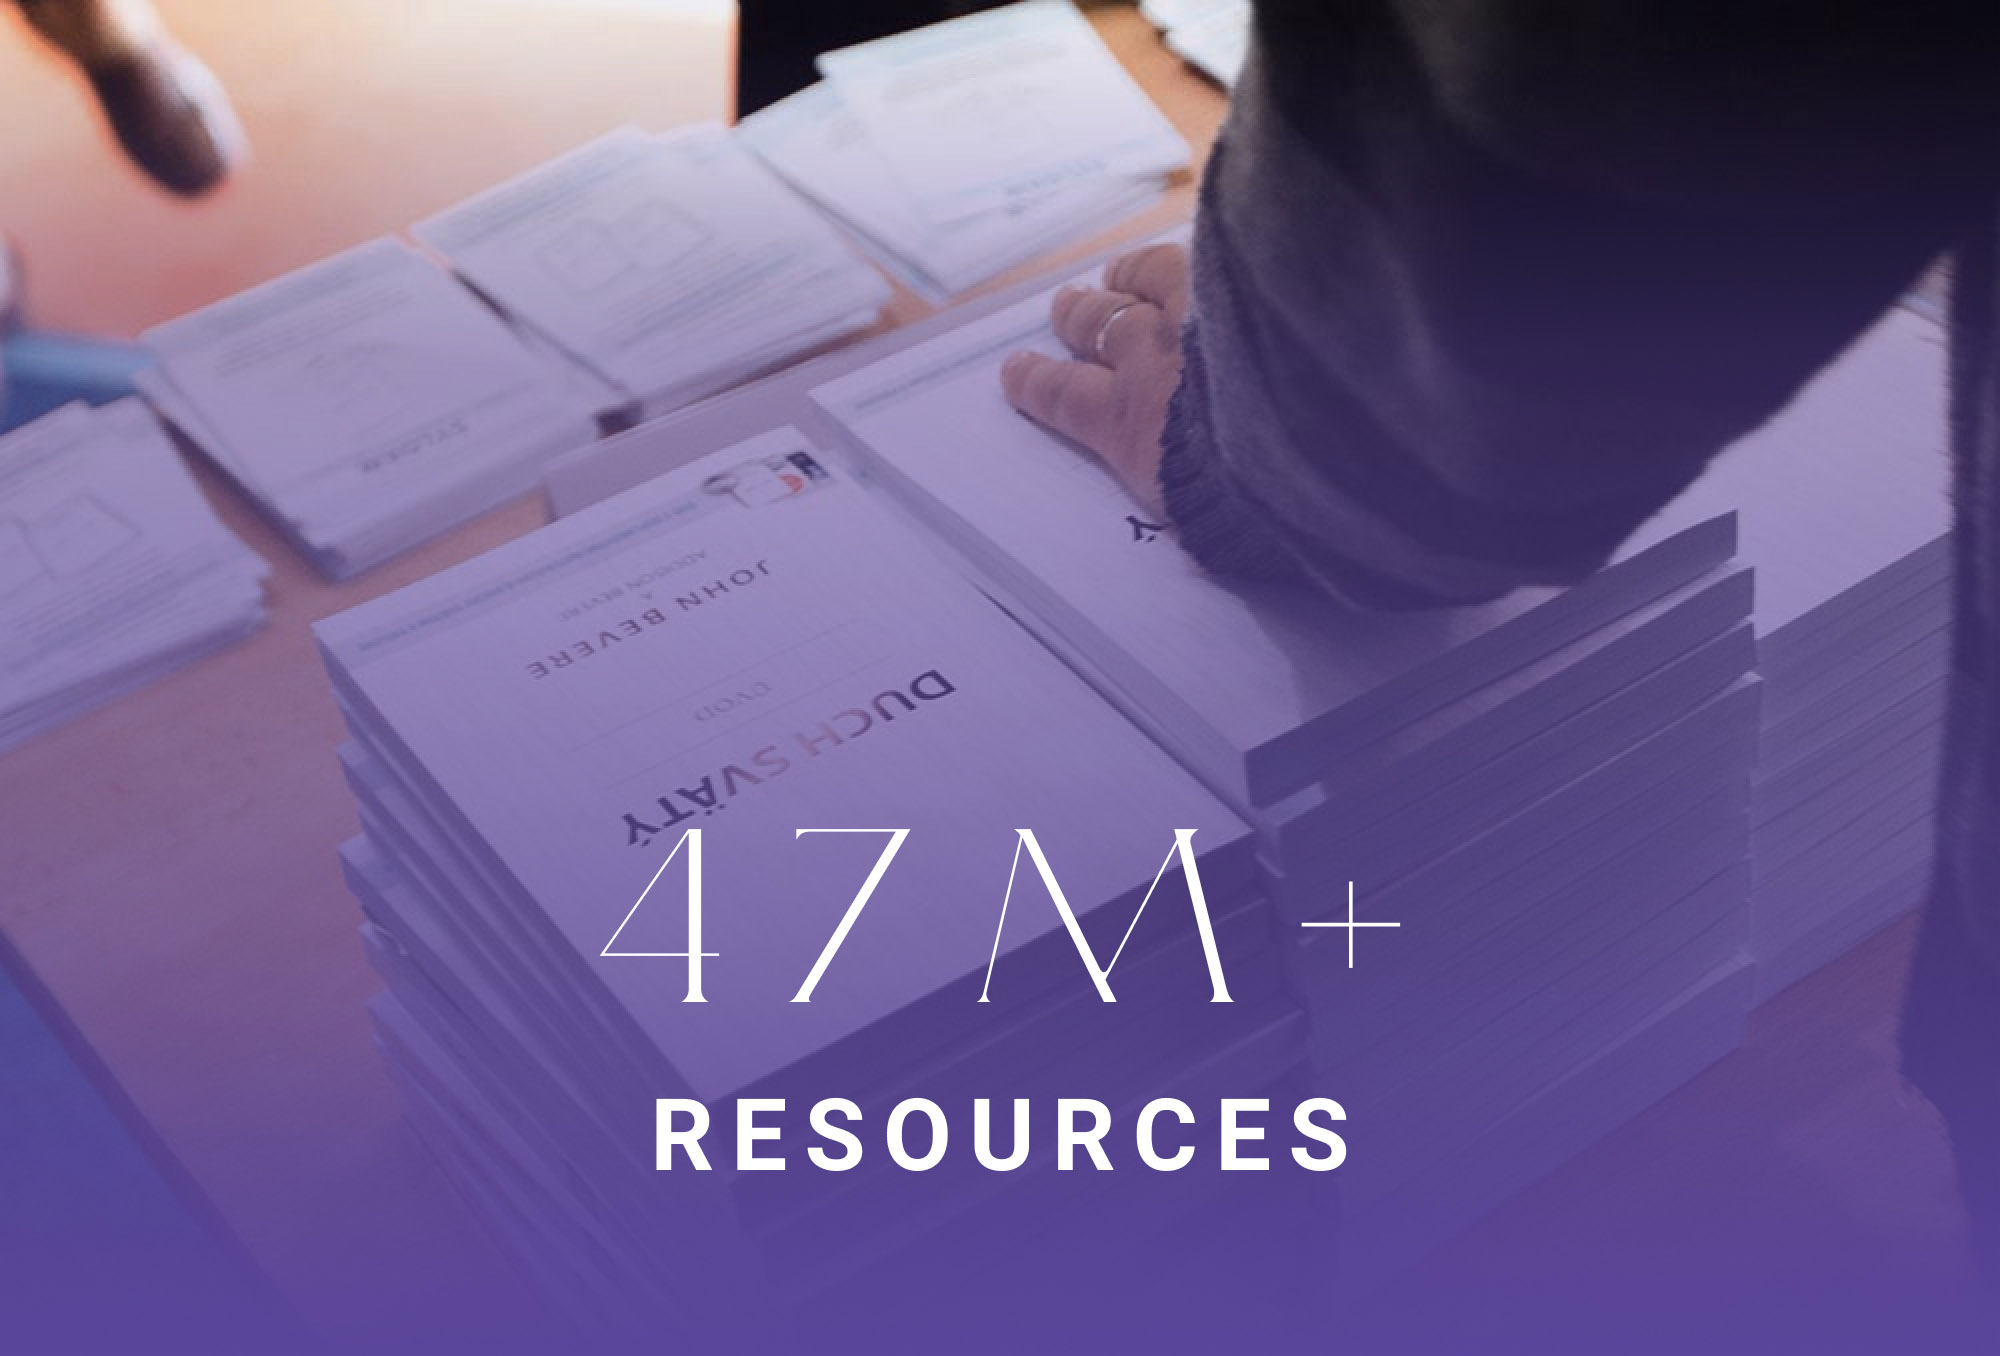 47 million + Resources